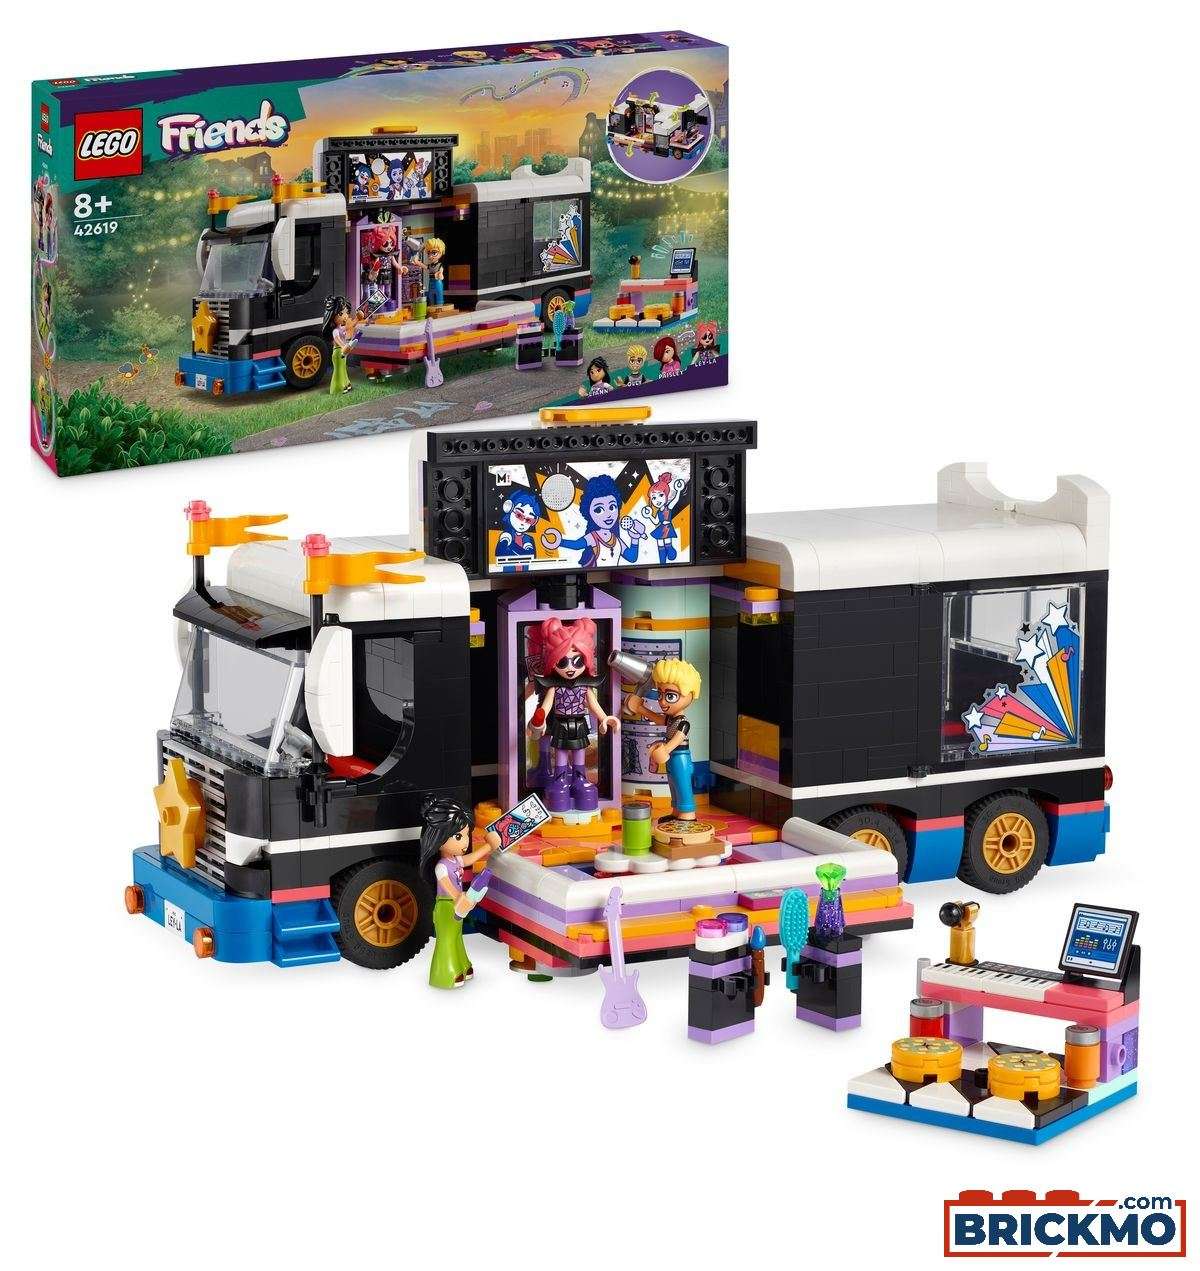 LEGO Friends 42619 Toerbus van popster 42619